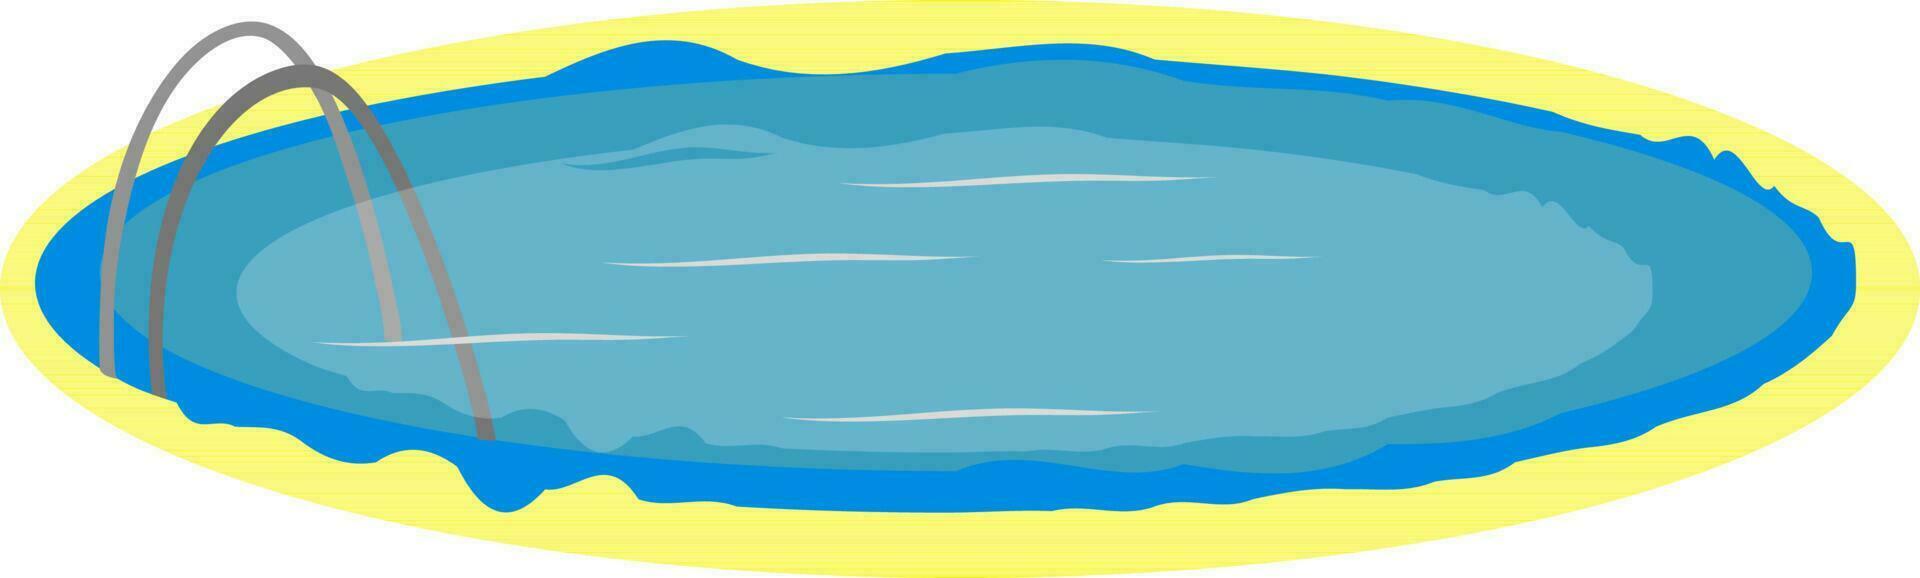 plat illustration de nager bassin. vecteur